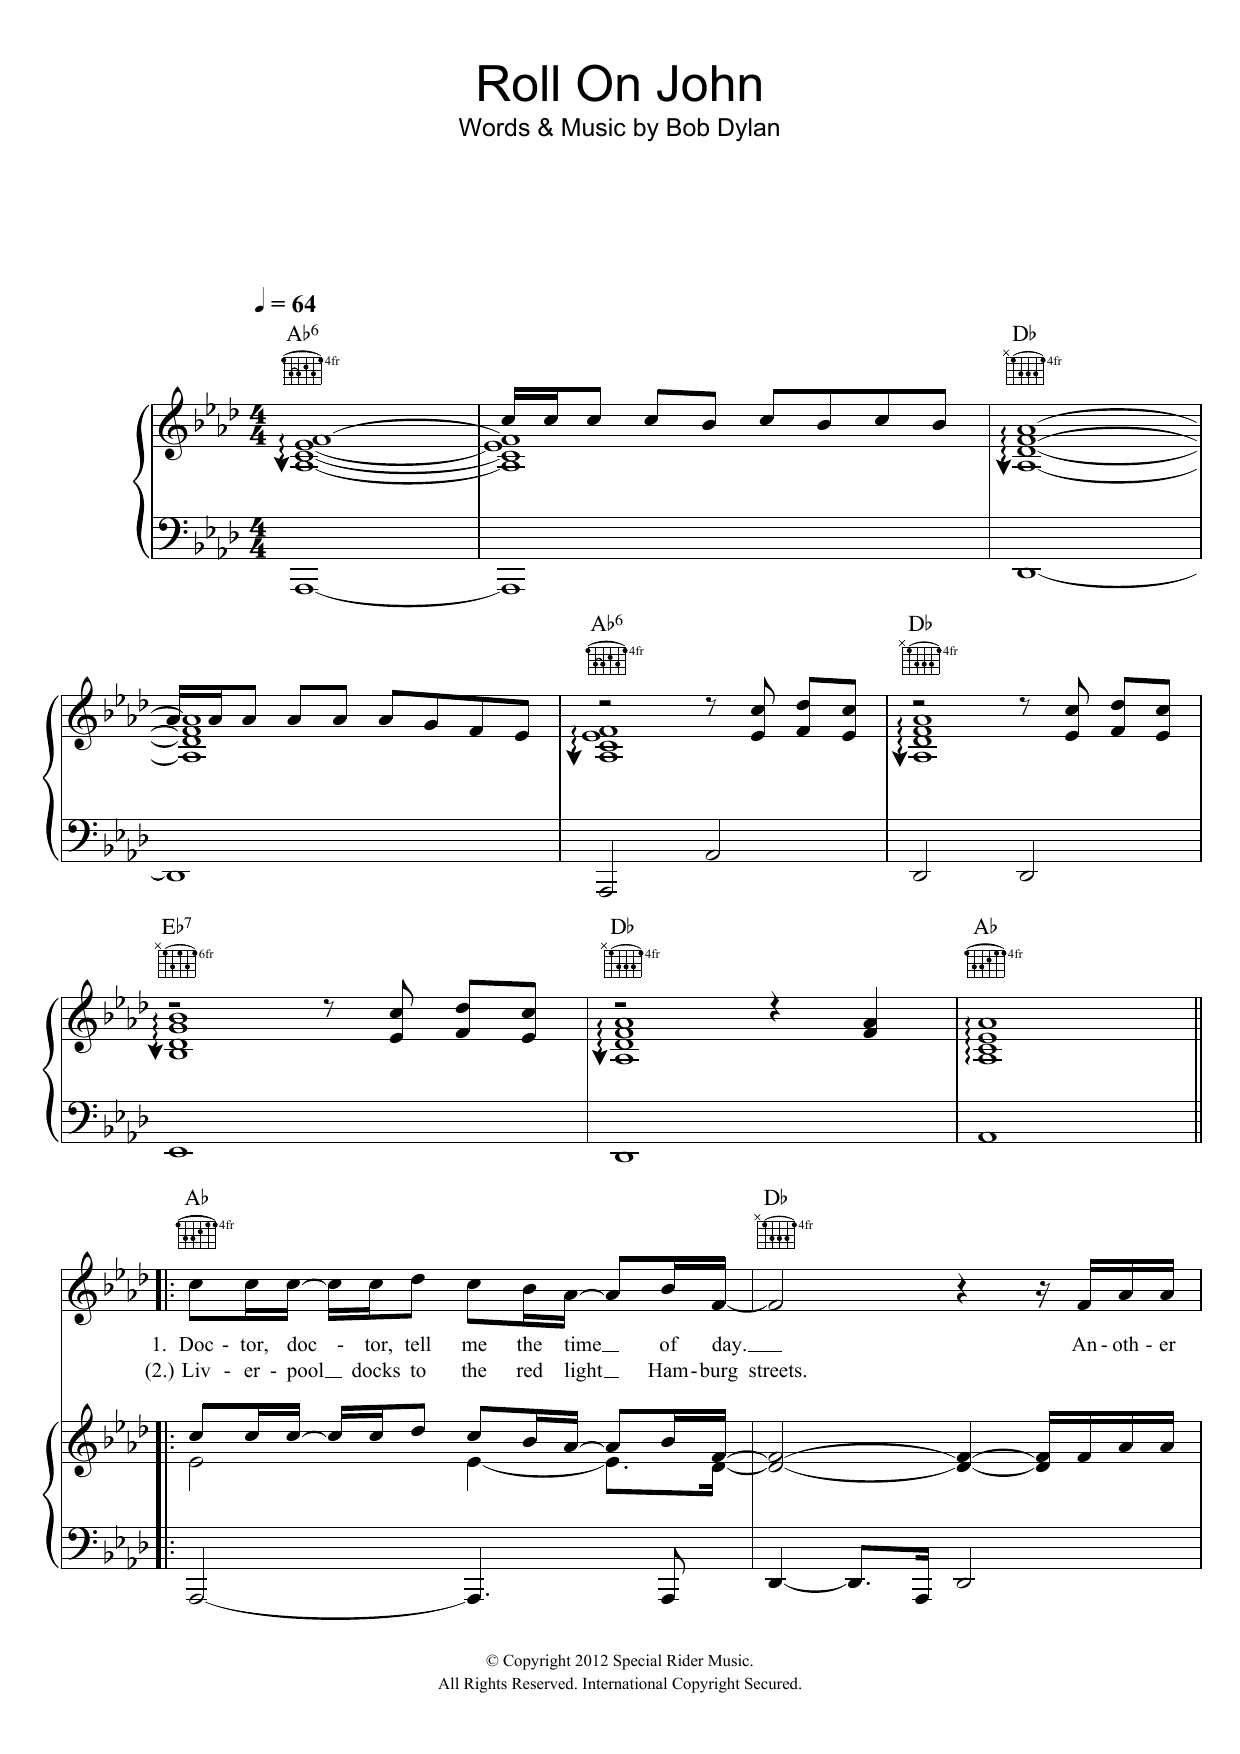 Bob Dylan Roll On John Sheet Music Notes & Chords for Ukulele Lyrics & Chords - Download or Print PDF